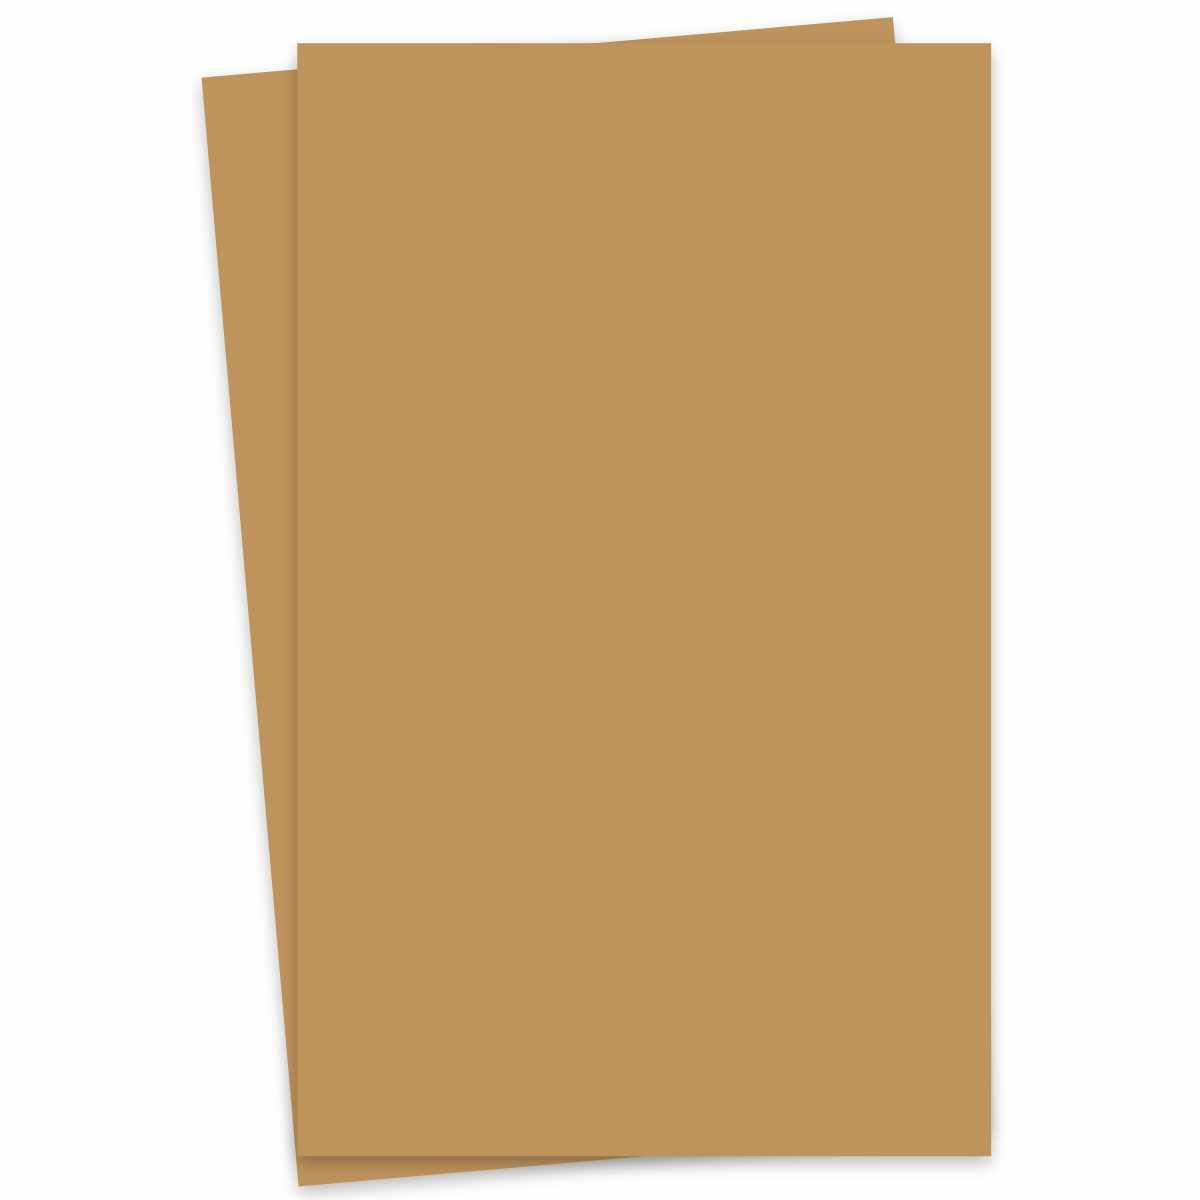 Burano BRIGHT YELLOW (51) - 11X17 Cardstock Paper - 92lb Cover (250gsm) -  100 PK